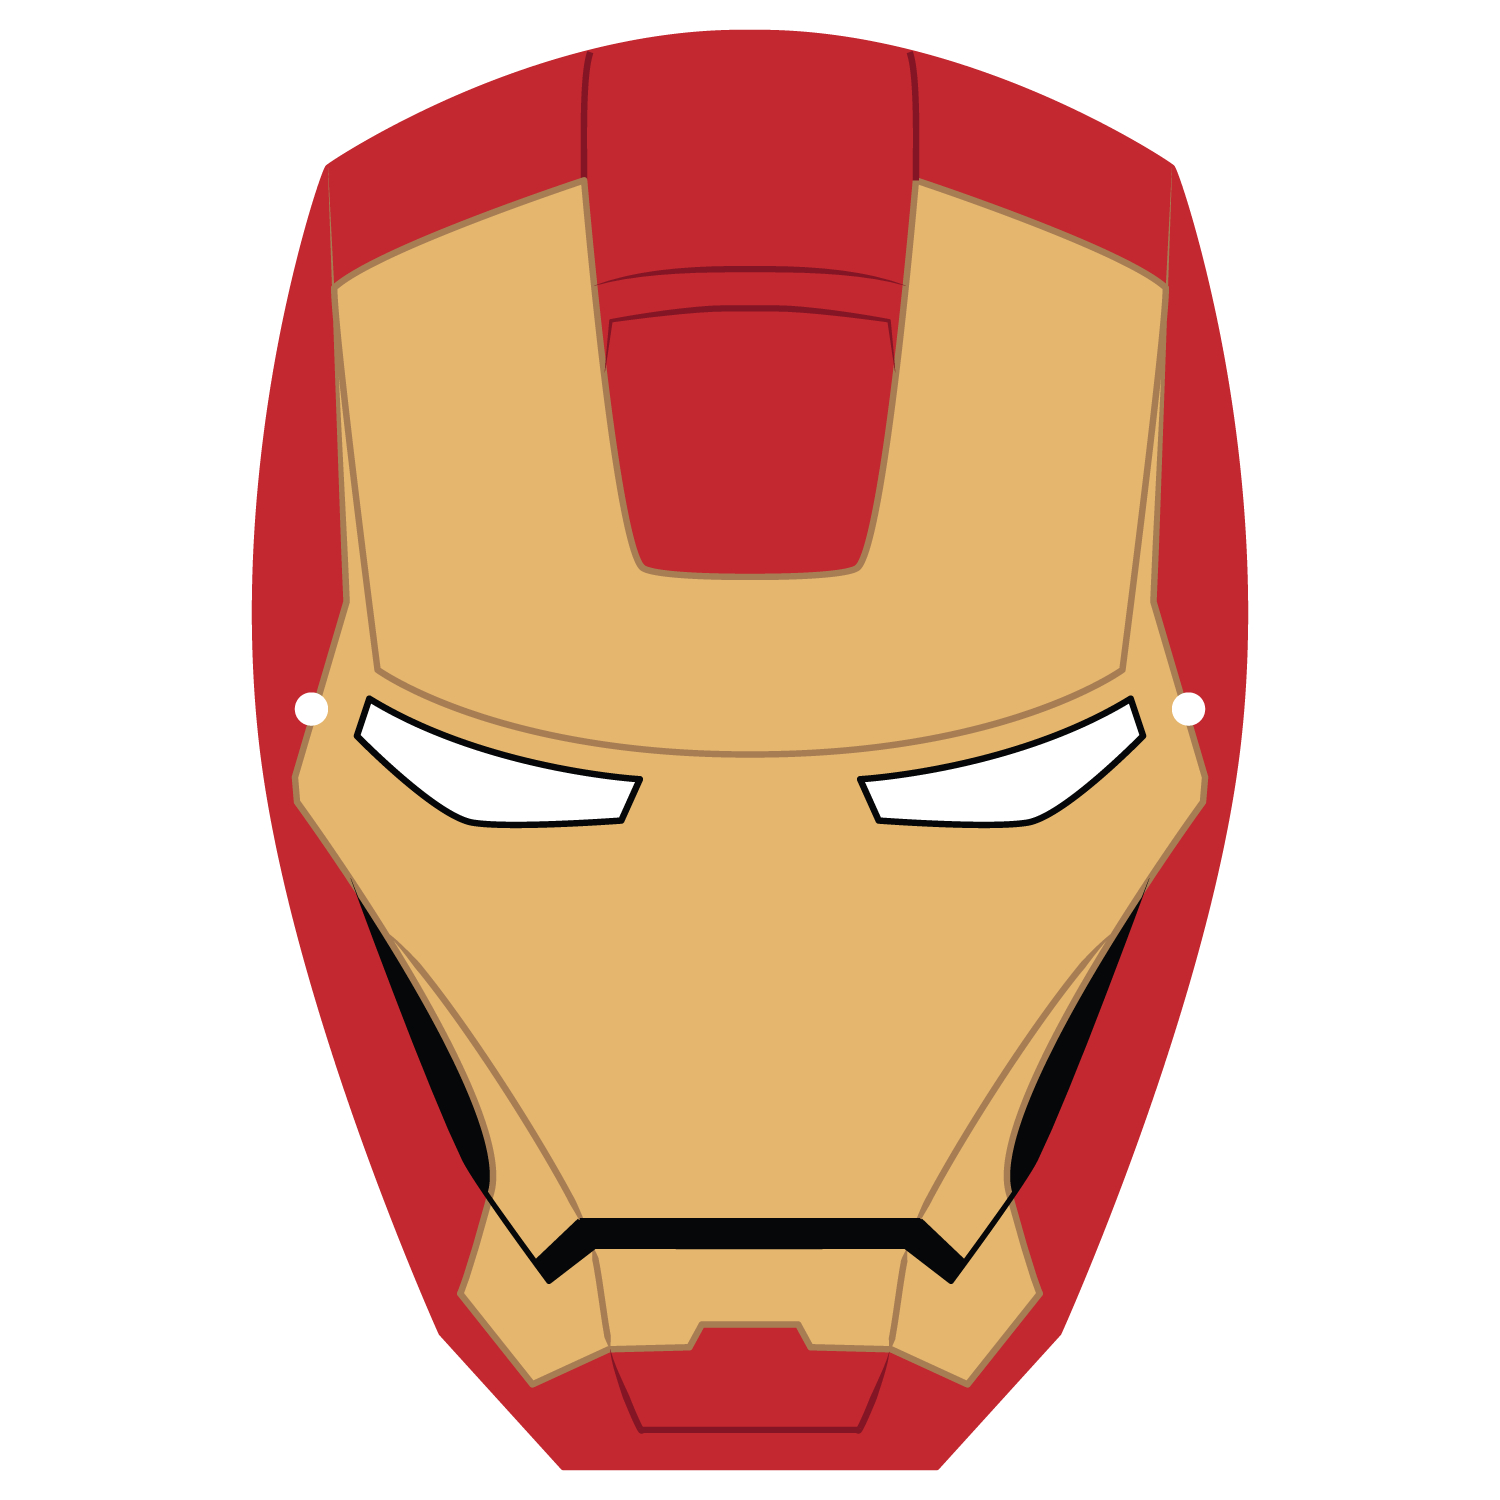 Ironman Mask Template | Free Printable Papercraft Templates - Free Printable Ironman Mask